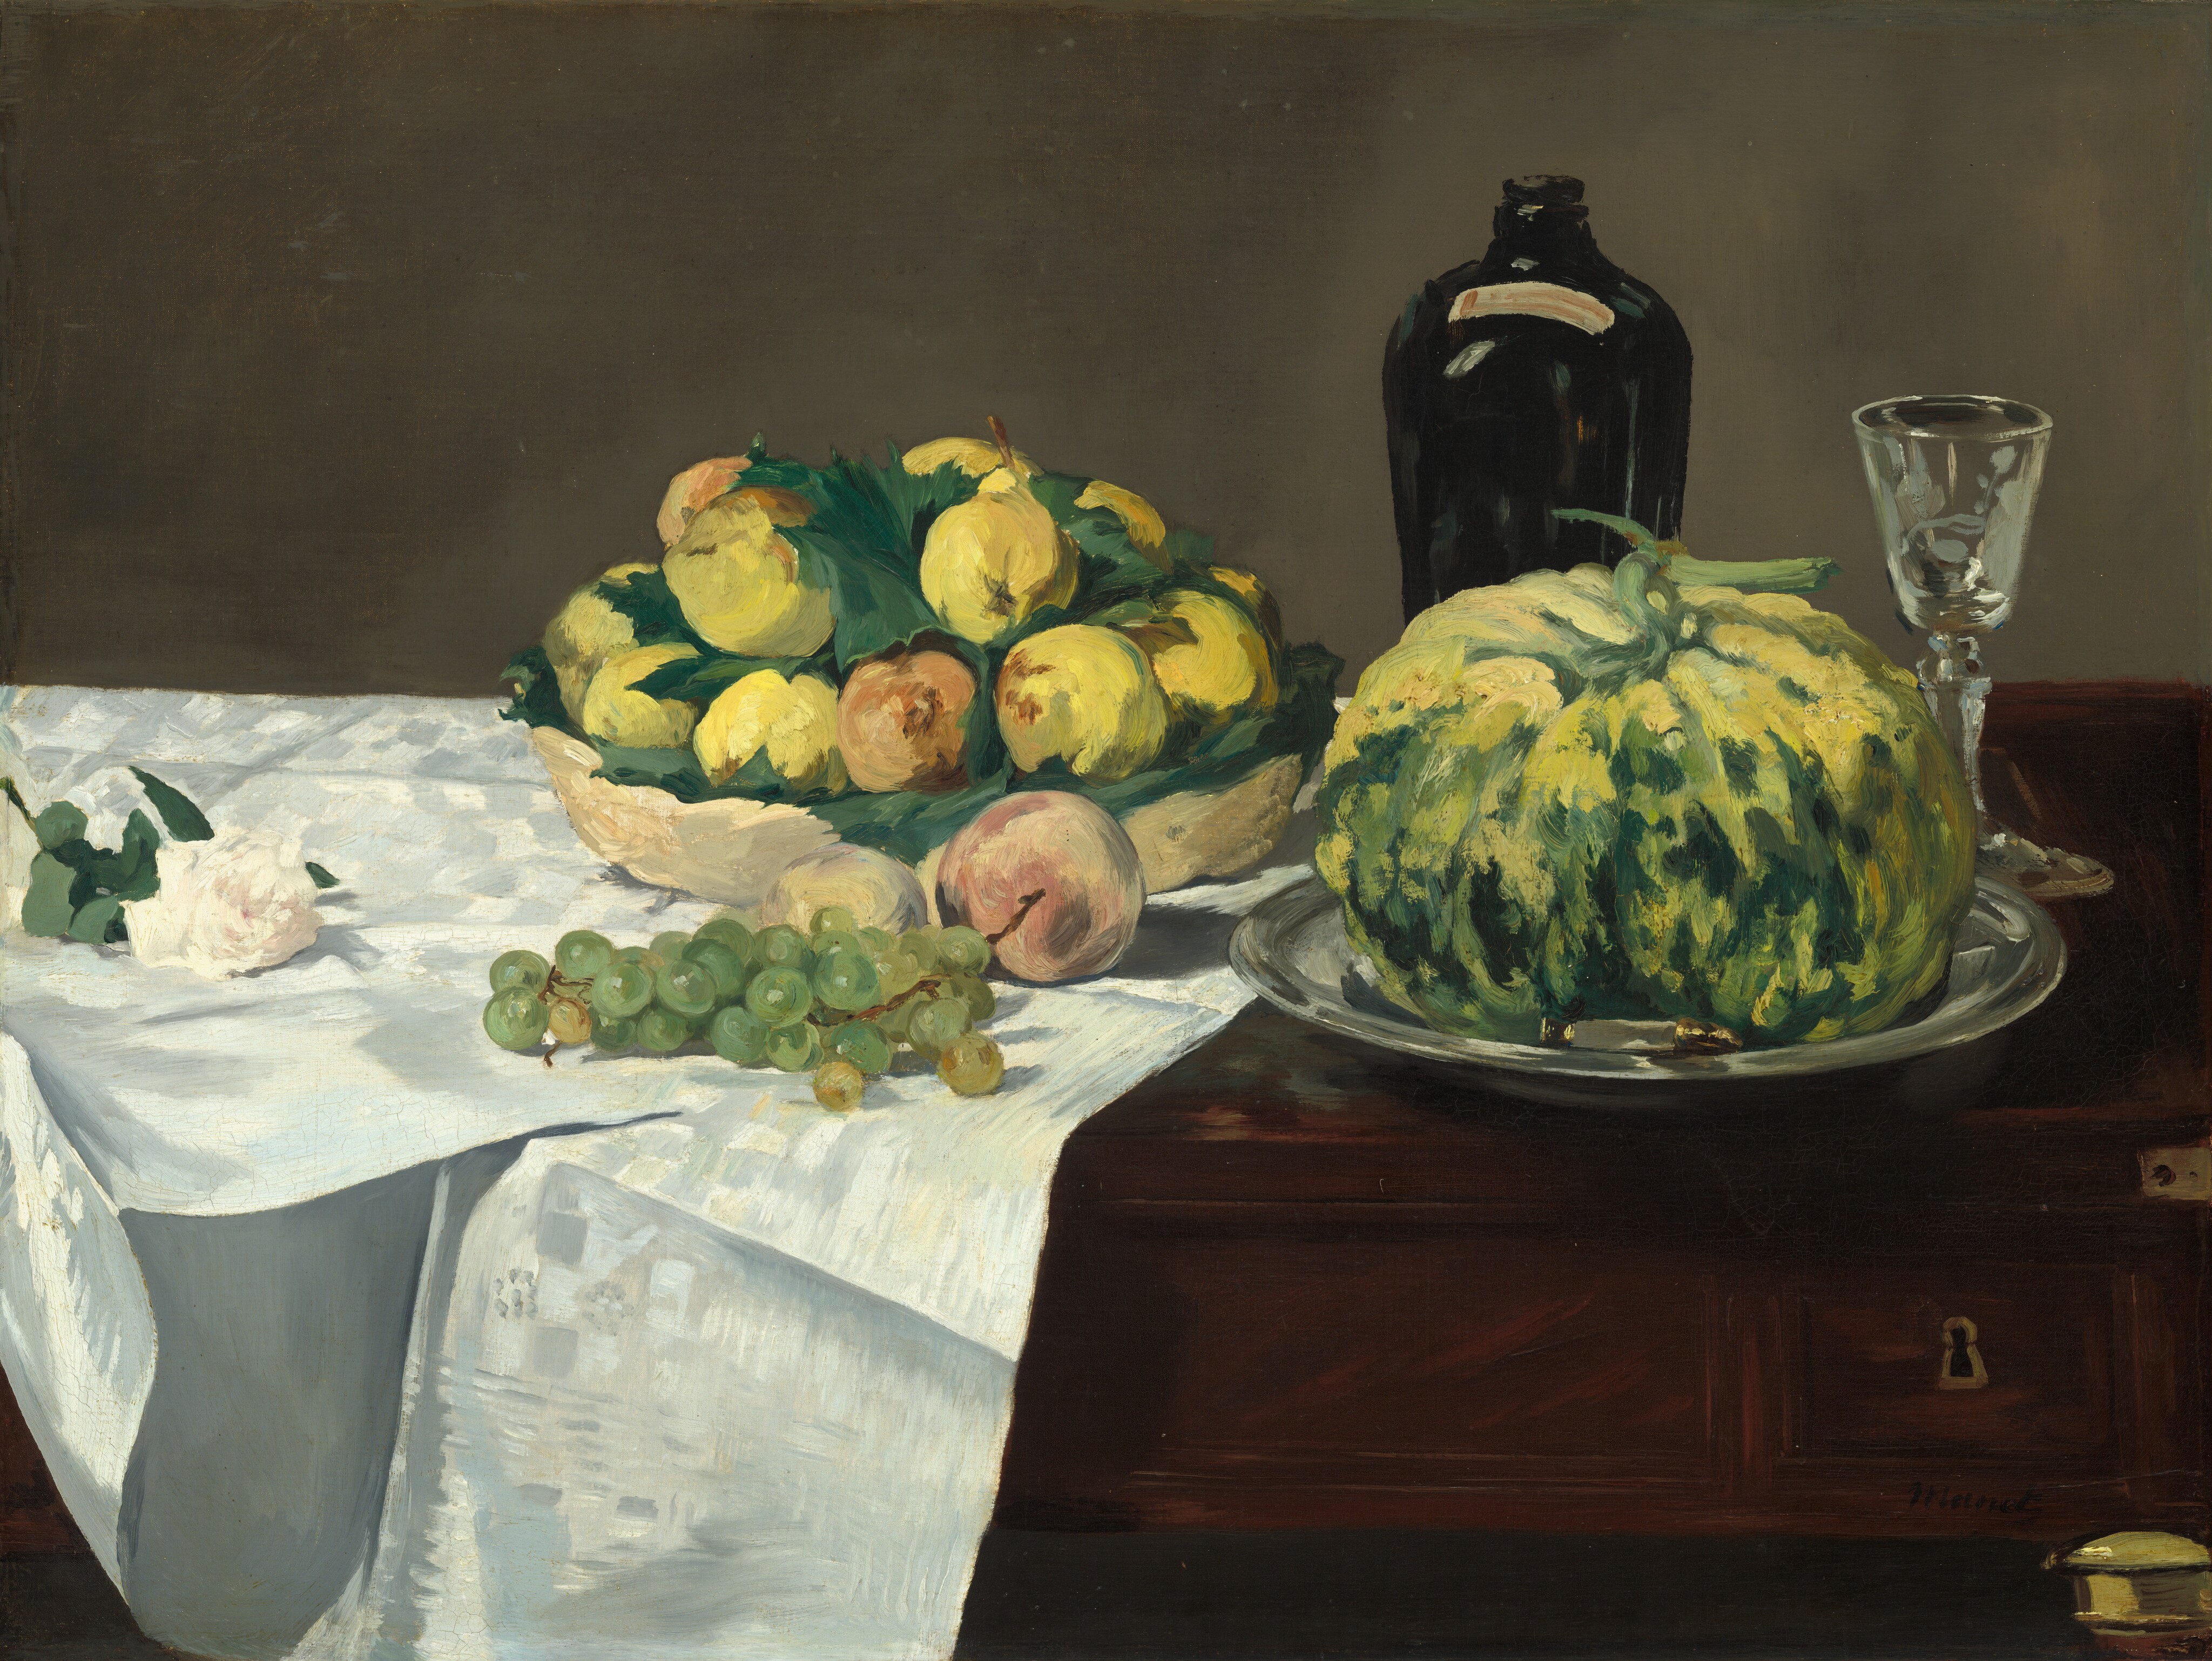 Картины мане. Эдуард Мане натюрморт с дыней и персиками. Натюрморт Эдварда Моне. Эдуард Мане натюрморты. Эдуард Мане (Edouard Manet) 1832-1883.